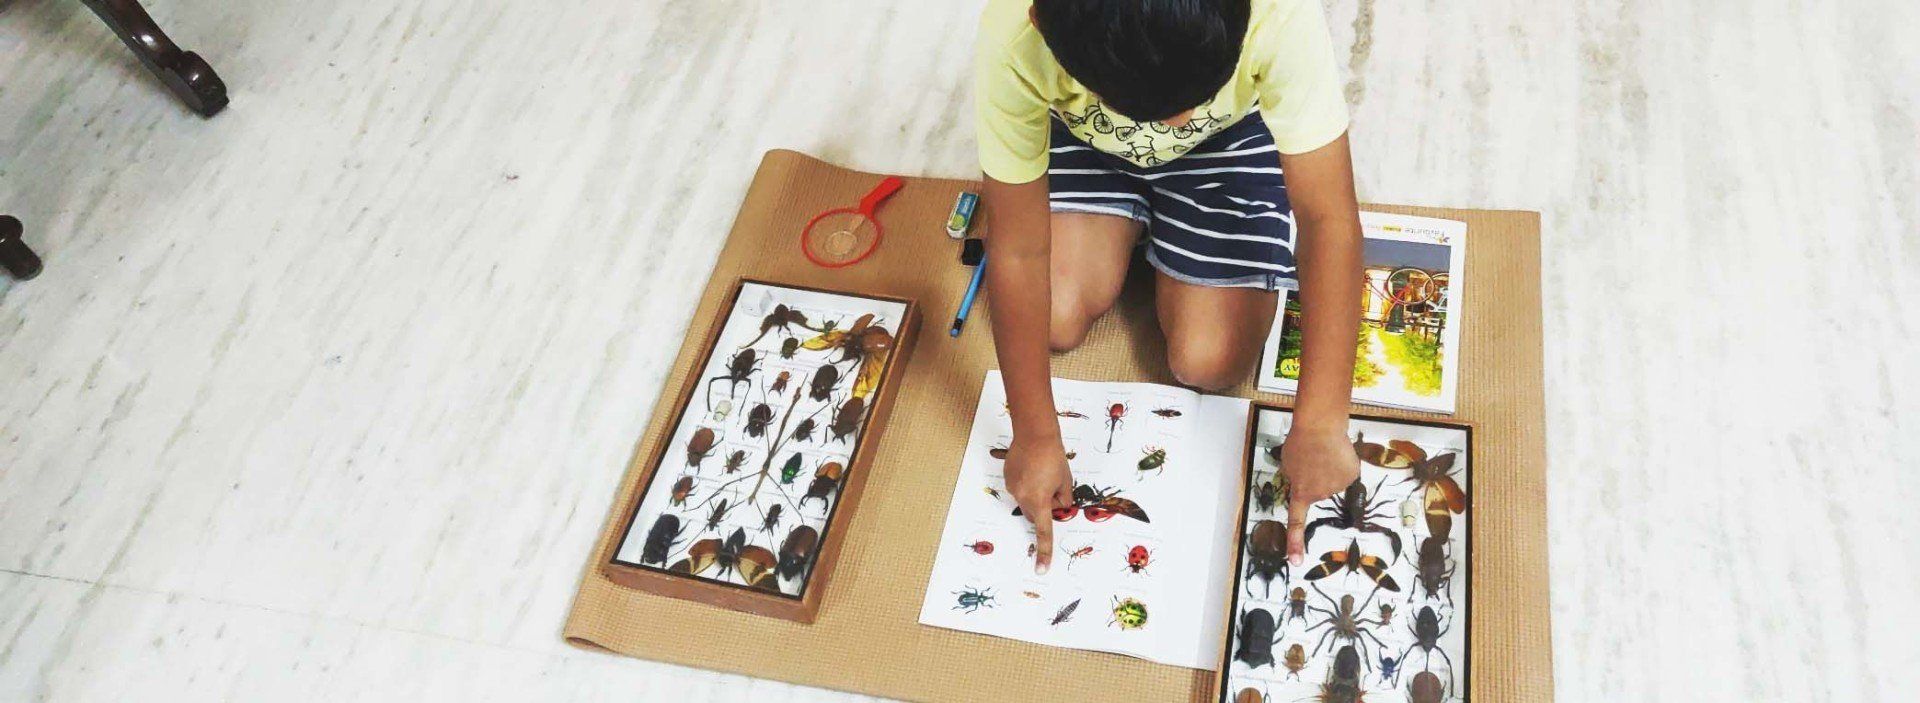 Kriya Montessori - Learn why Montessori for early years?